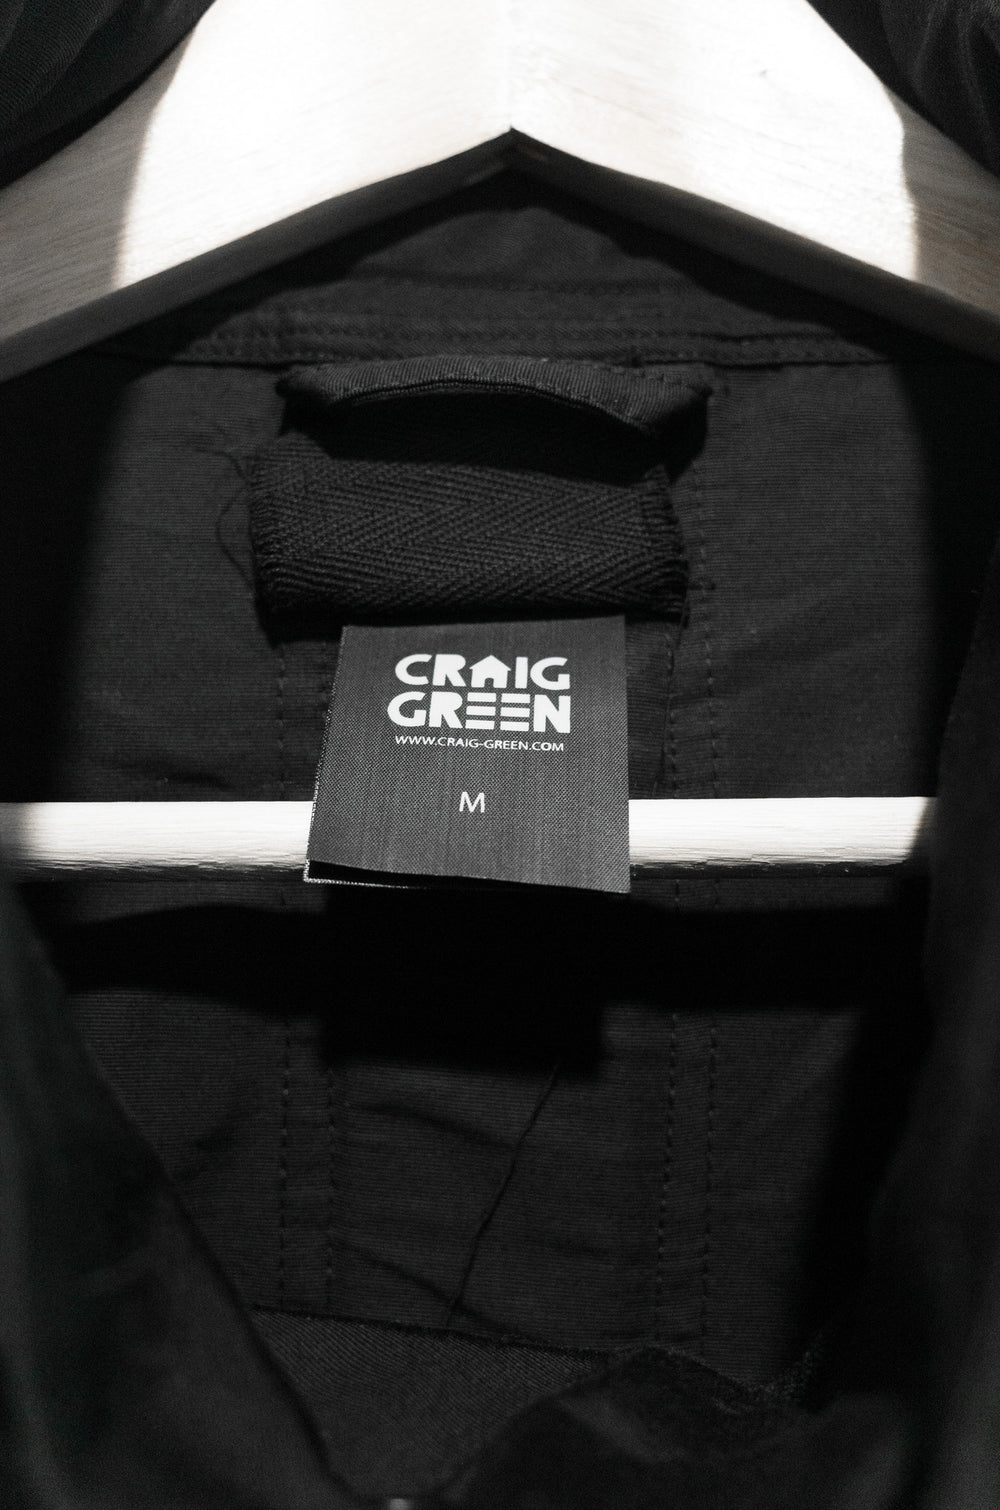 Craig Green AW15 Parachute Jacket